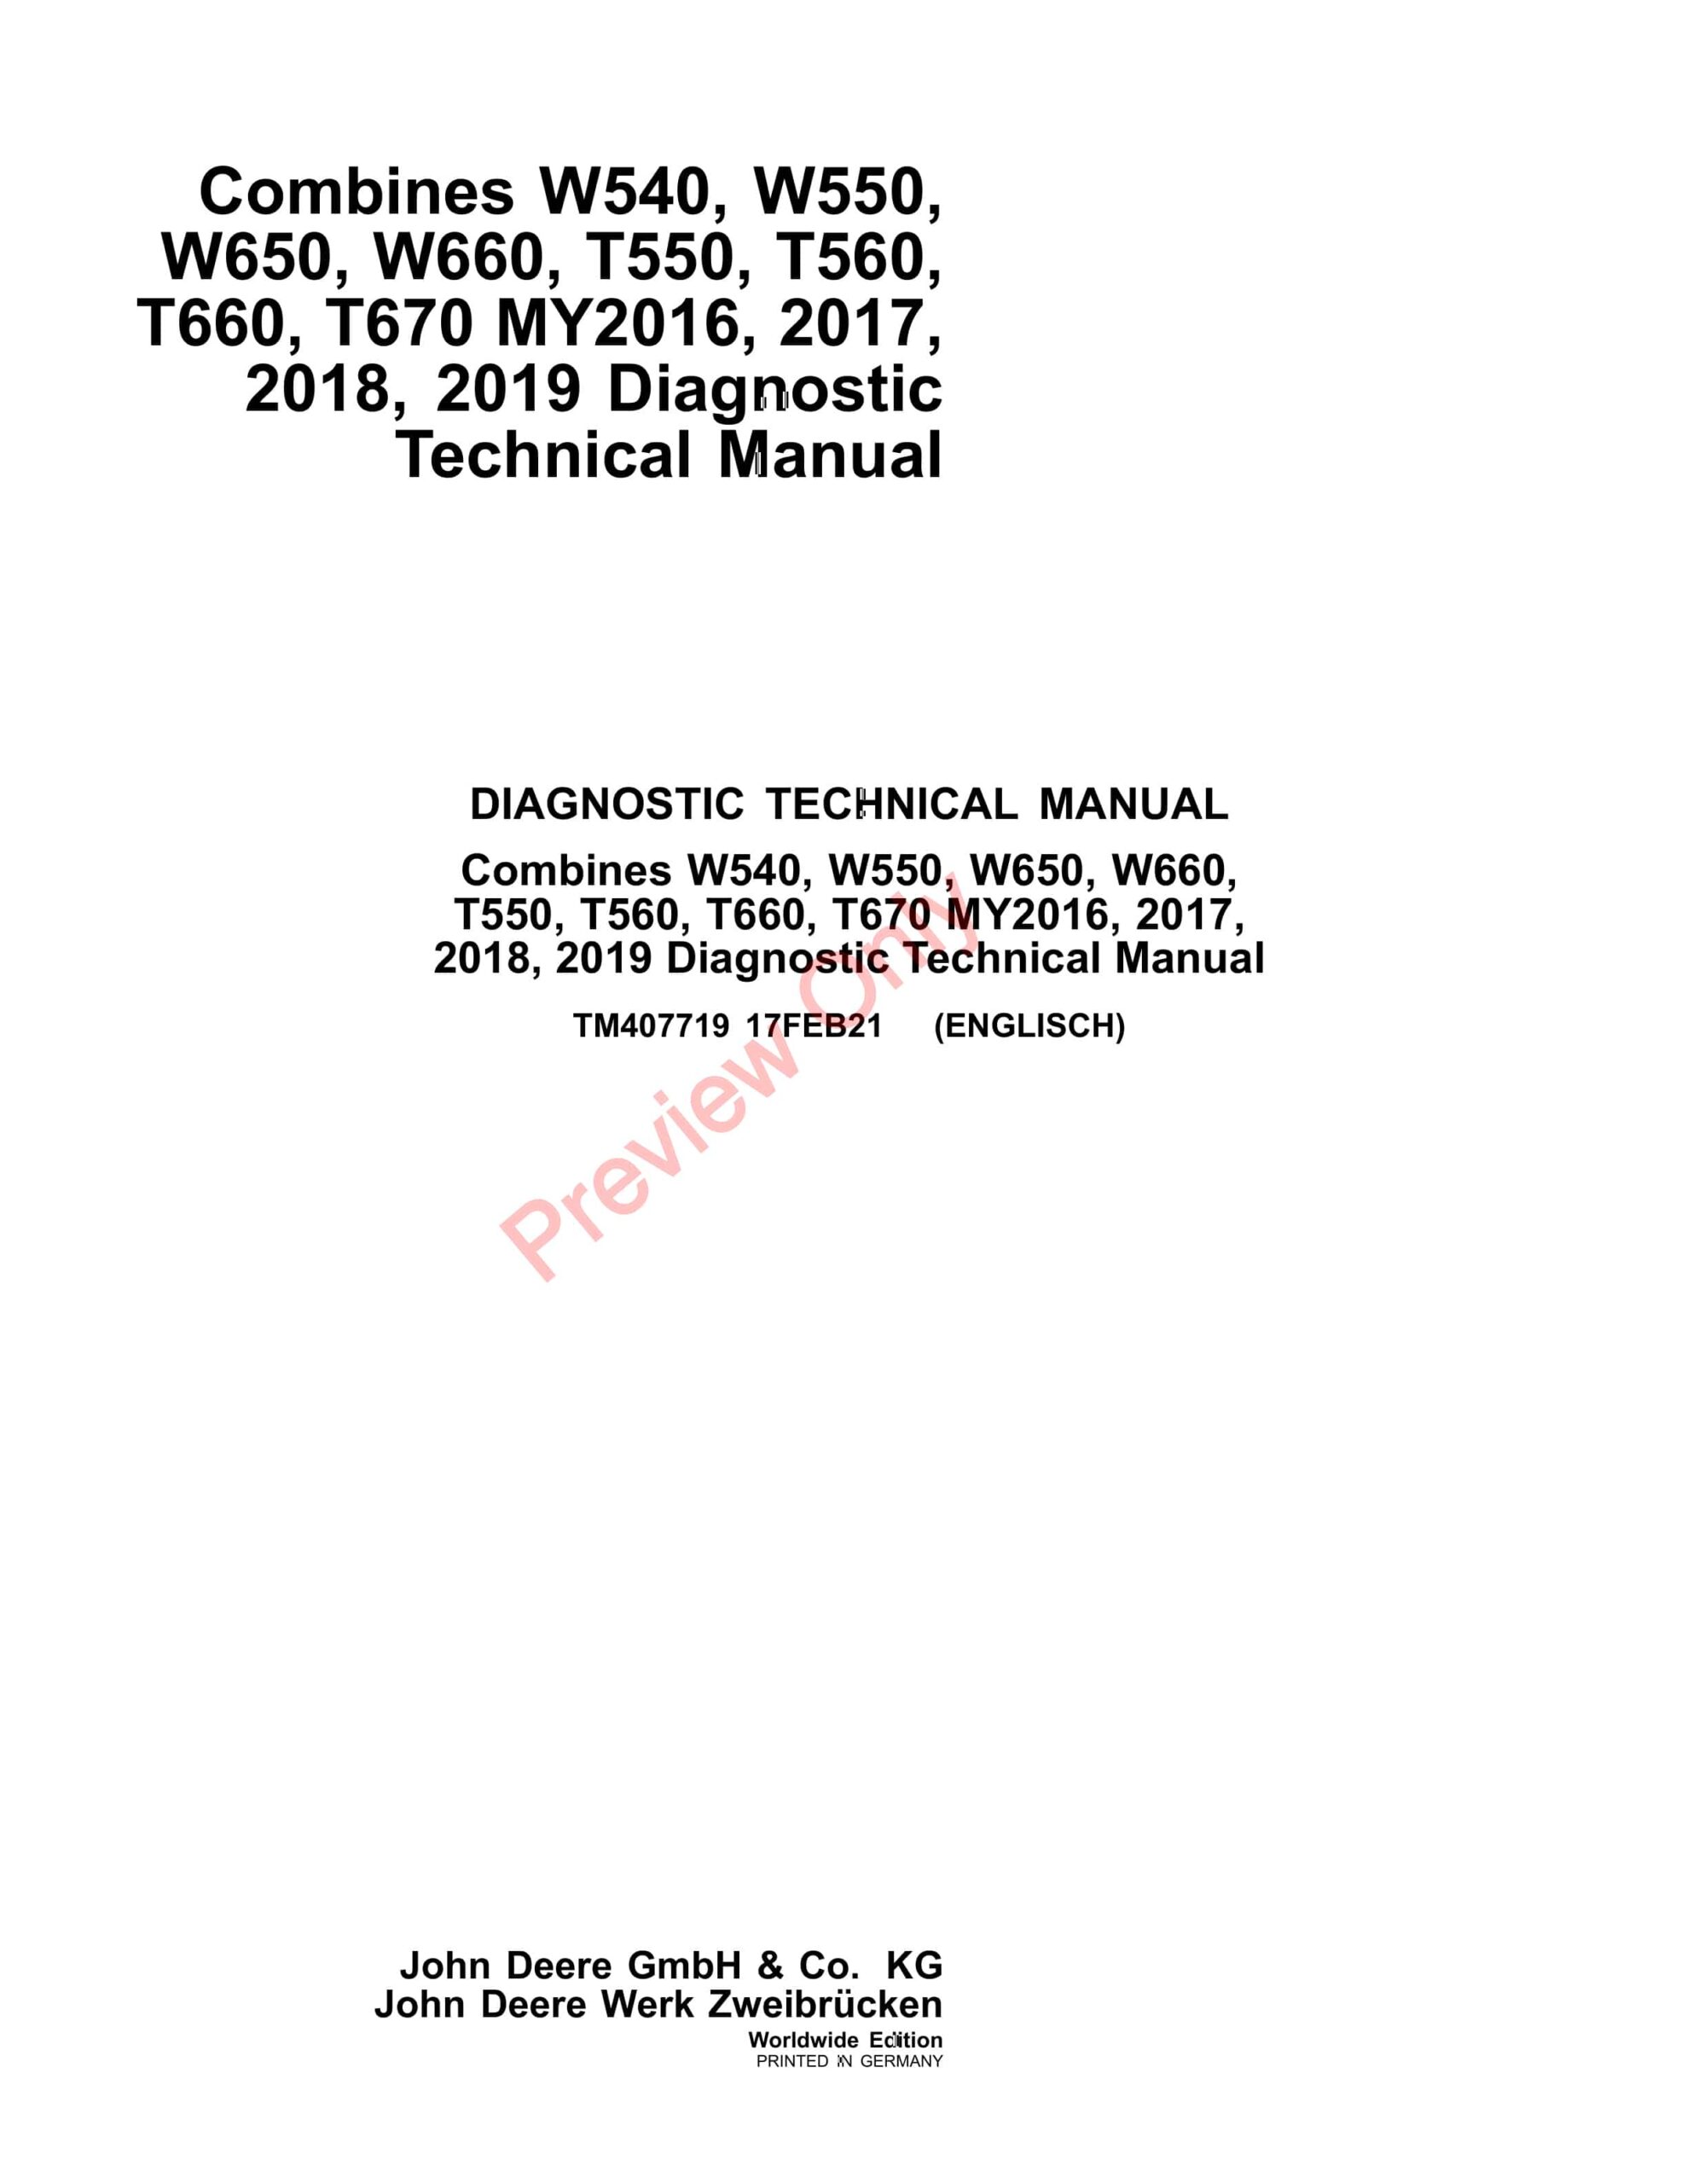 John Deere W540, W550, W650, W660, T550, T560, T660, and T670 Combines Diagnostic Technical Manual TM407719 17FEB21-1